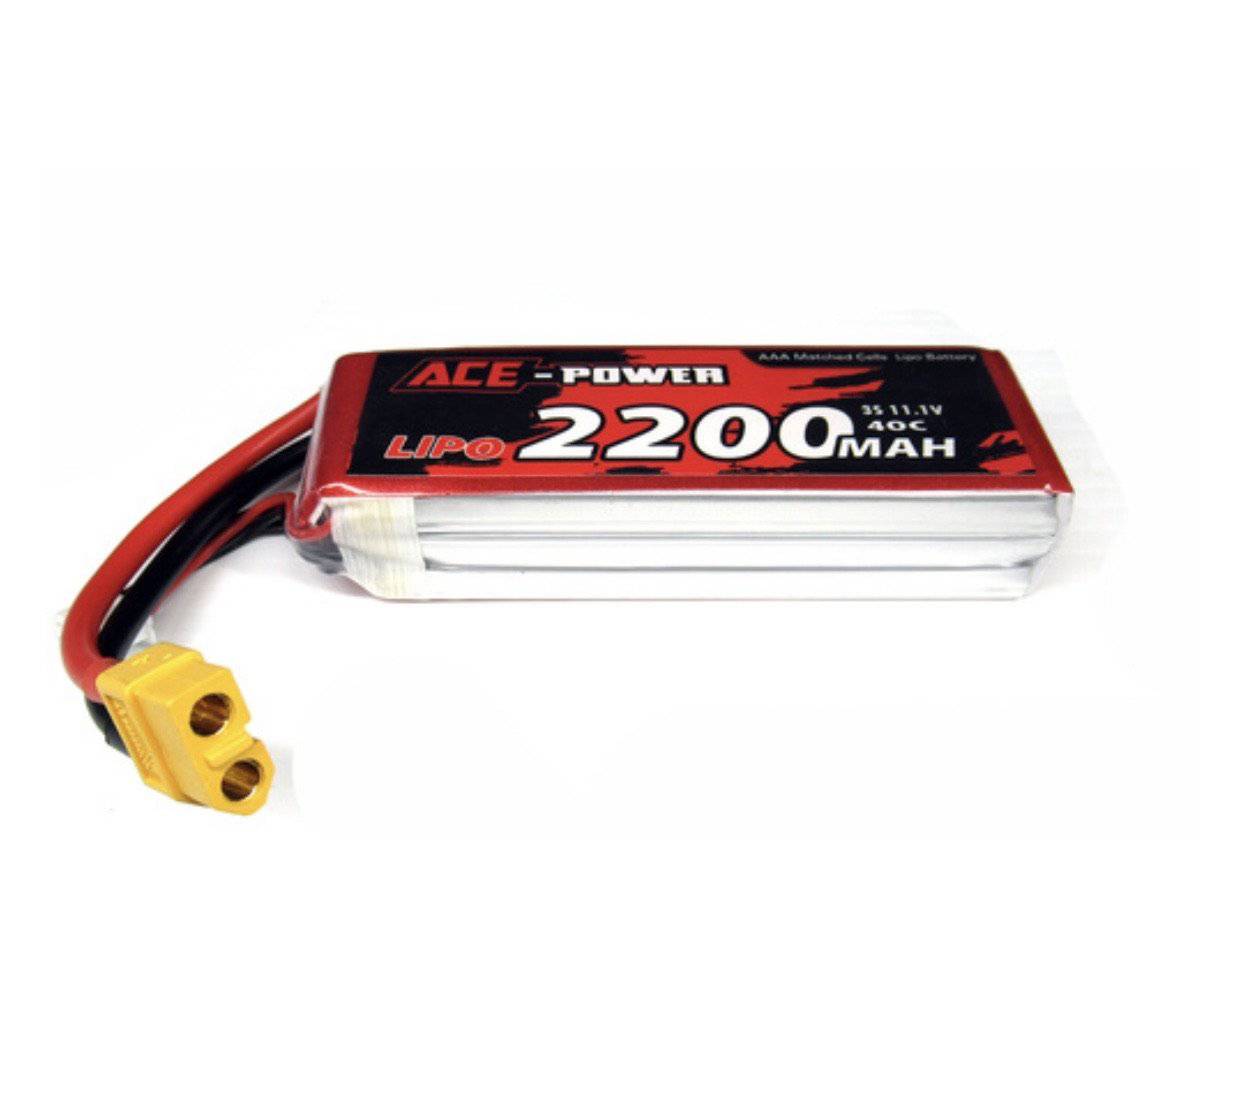 Ace Power - 2200mah 11.1v Soft Case - XT60 - Aussie Hobbies 